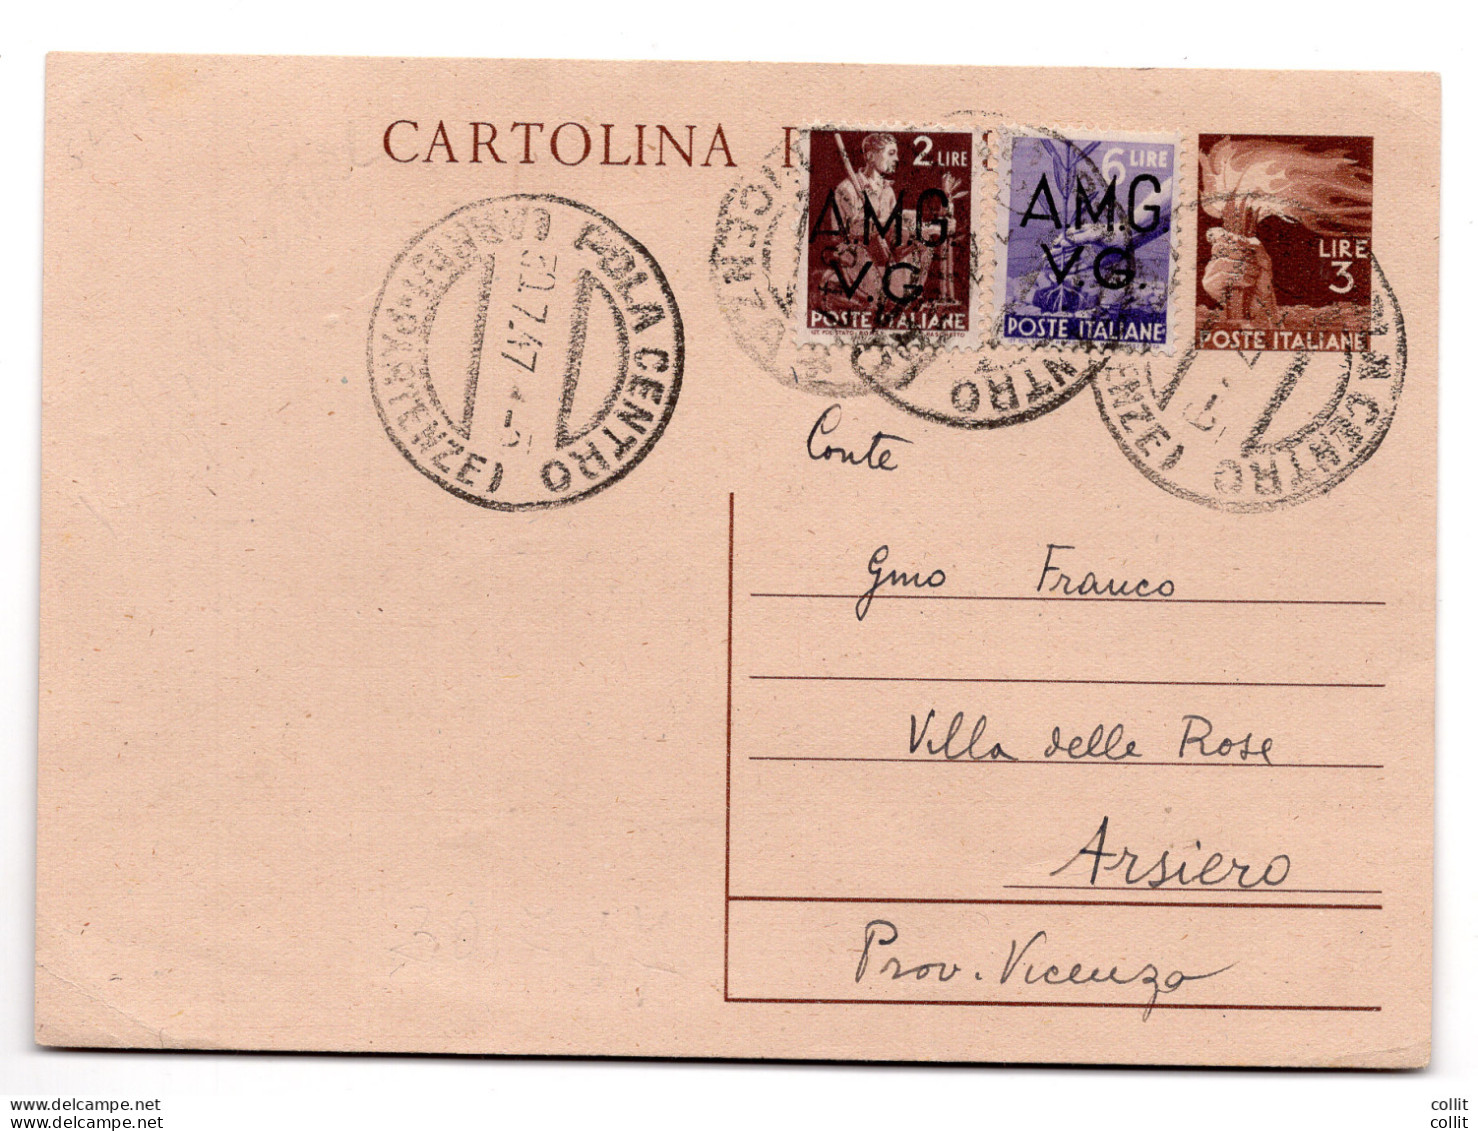 AMG.VG.-Democratica L.6 Cartolina Postale D'Italia Da L.3 Democratica - Nuevos